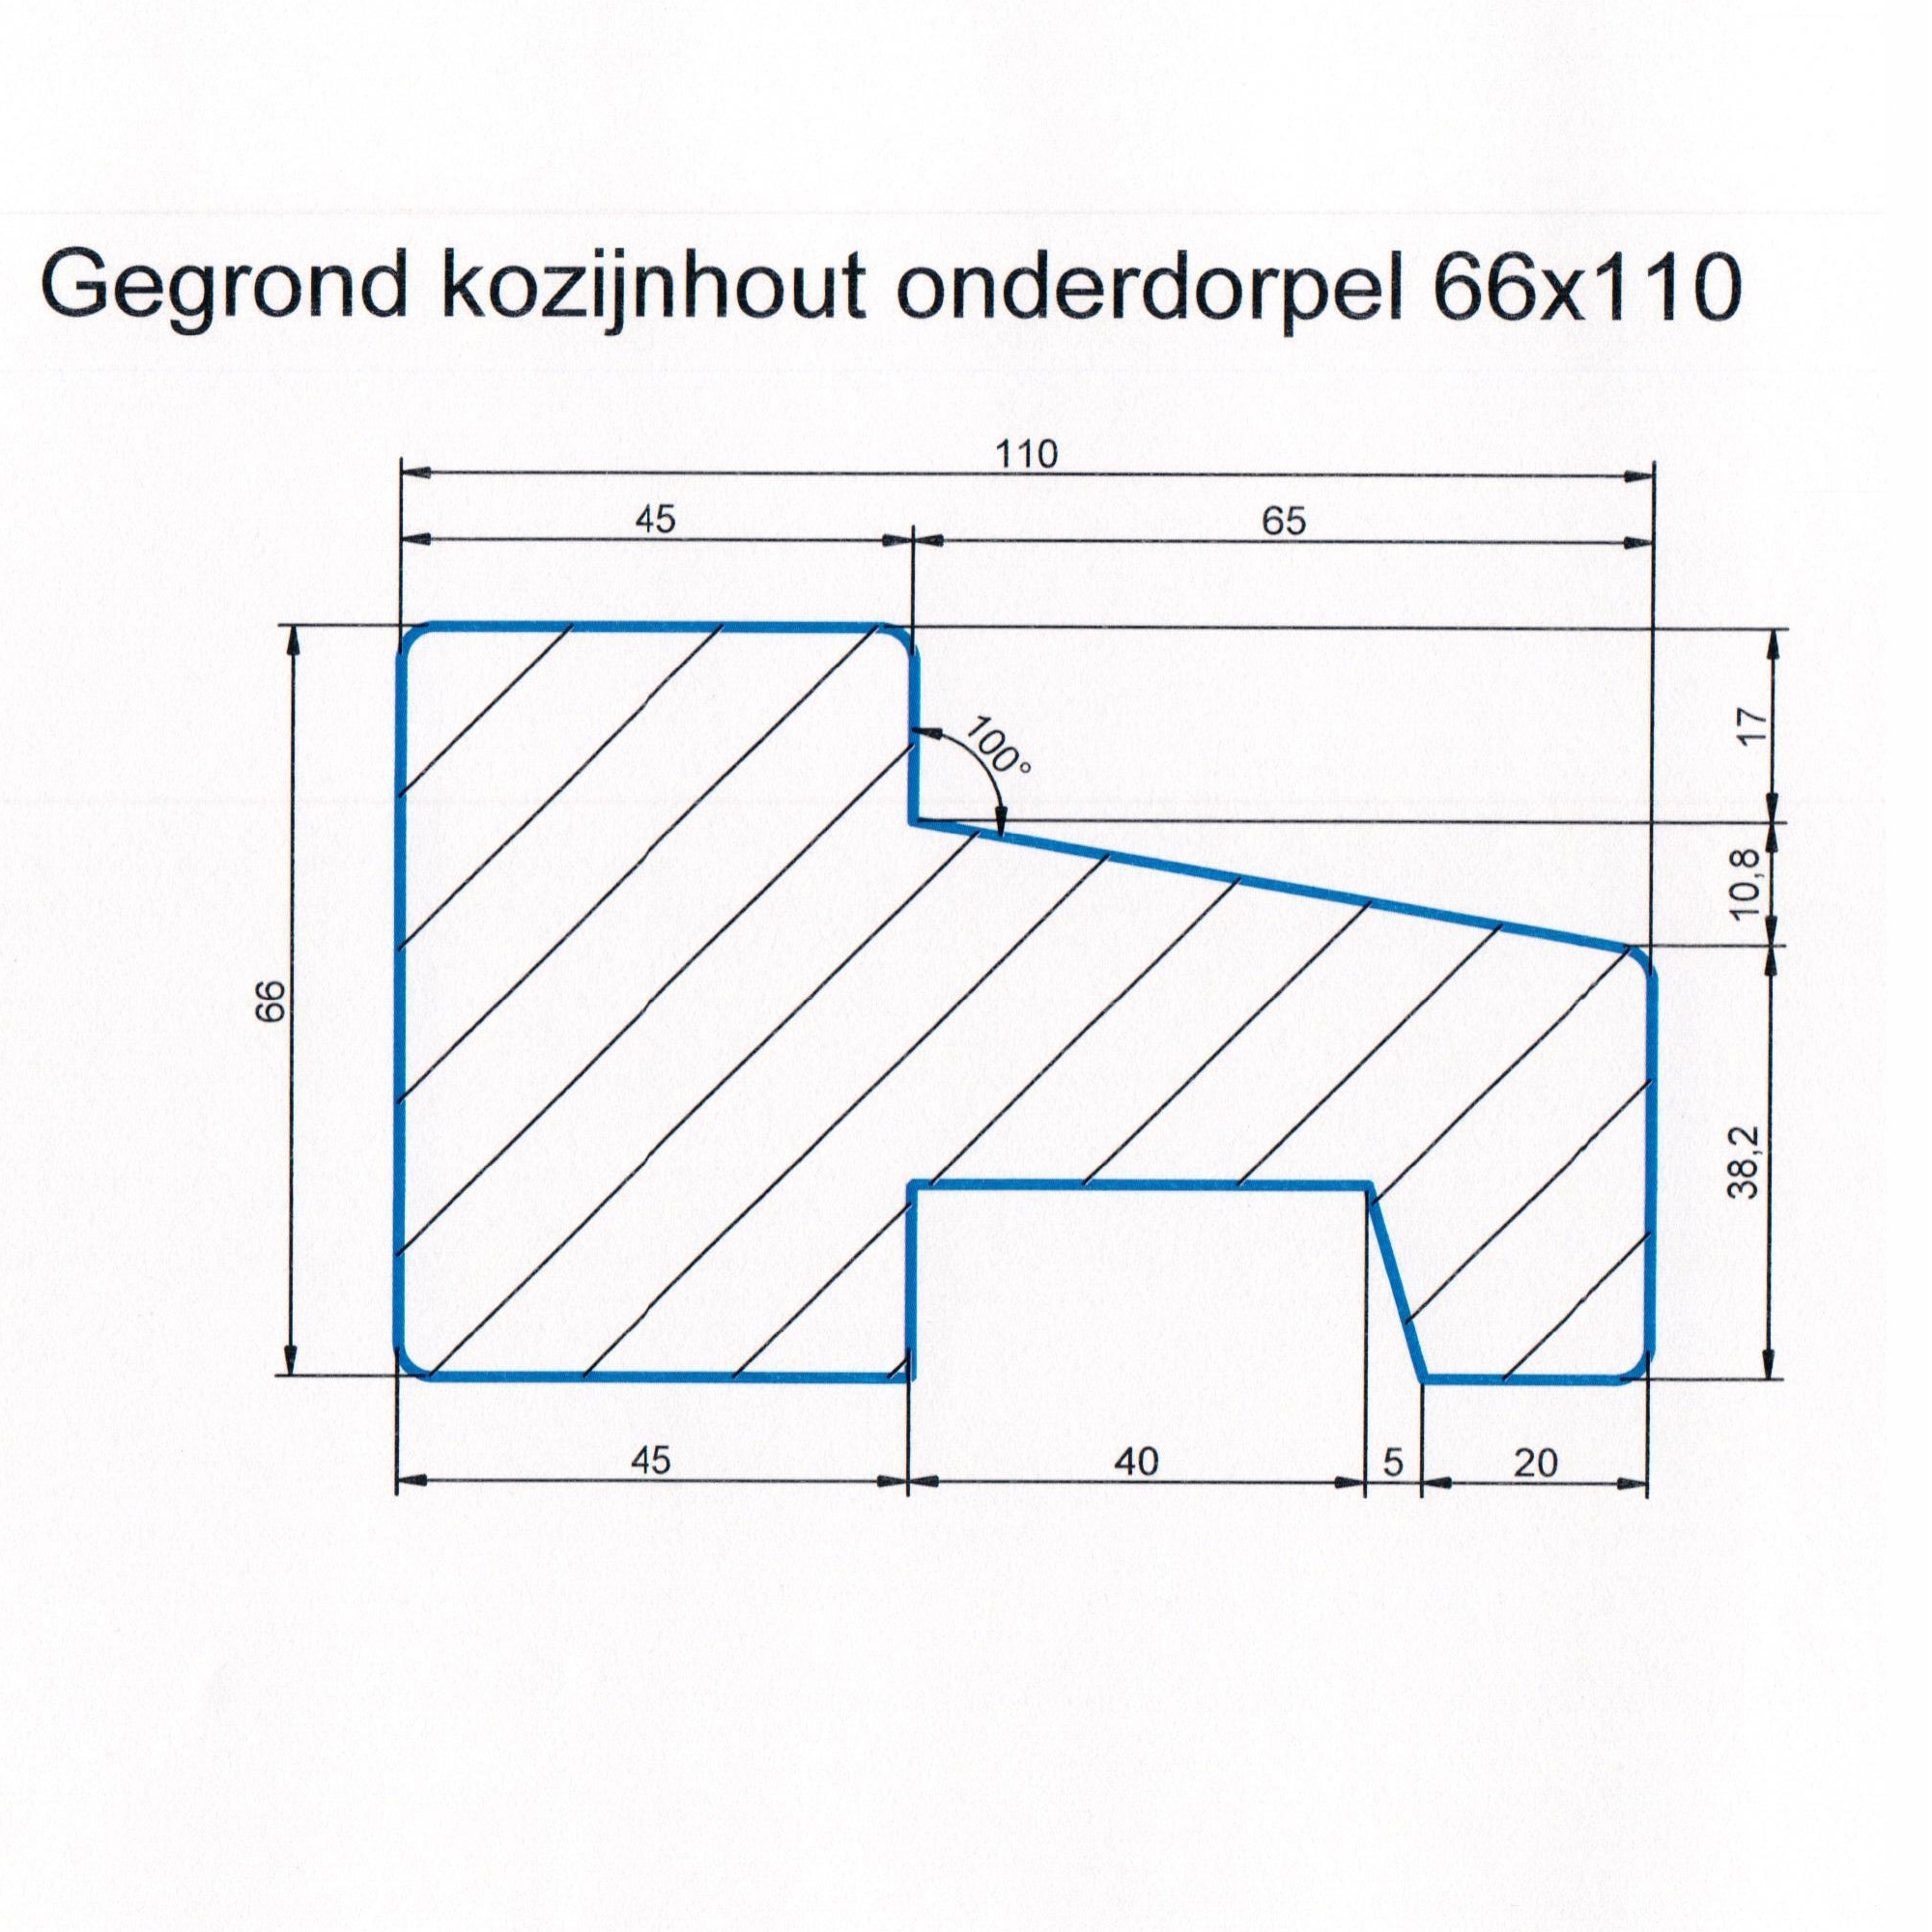 M1 Hardhout 66x110 Kozijnhout Onderdorpel